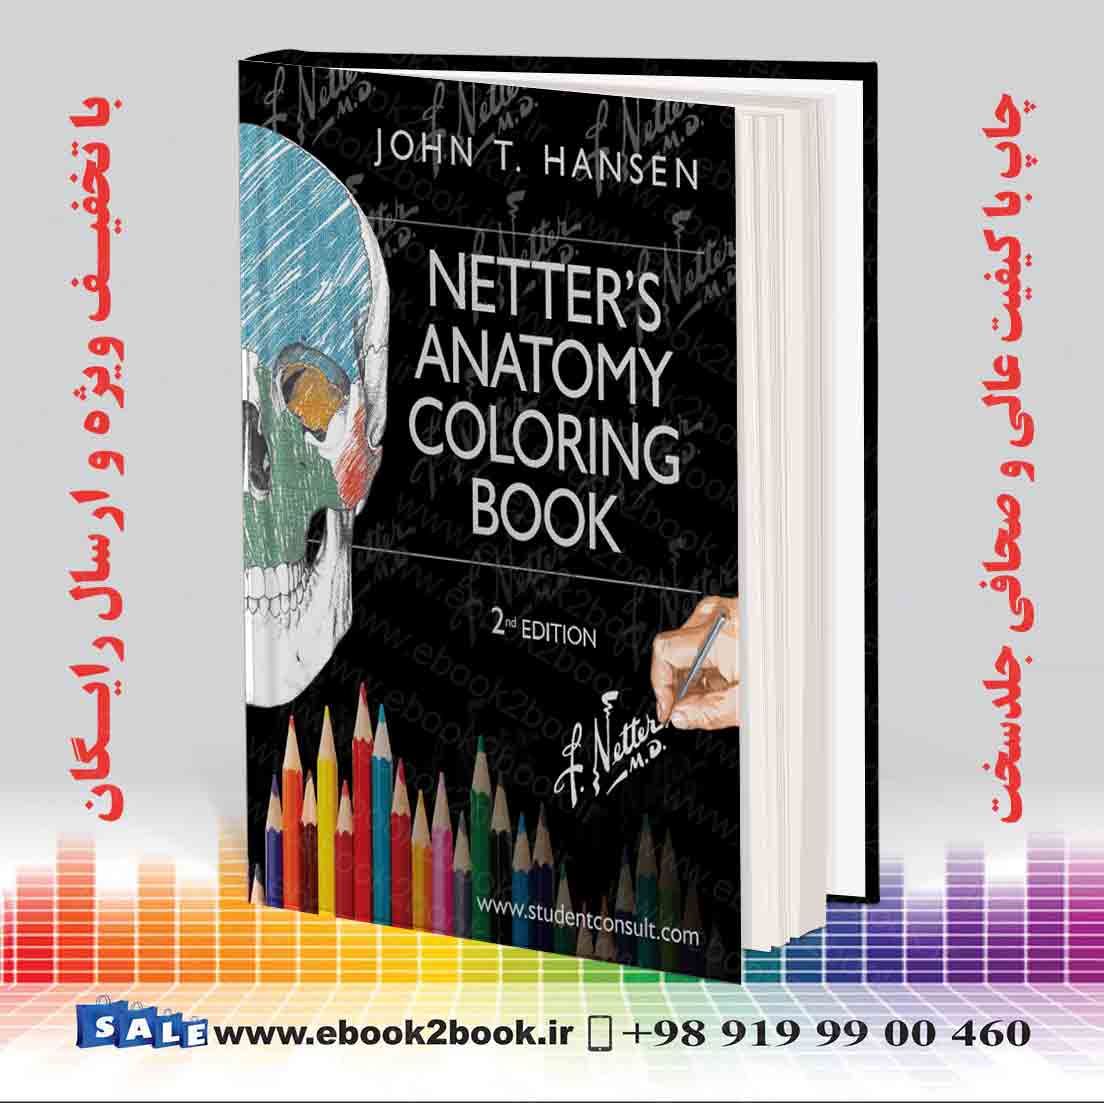 The Netter’s Anatomy Coloring Book, 2th edition | فروشگاه کتاب ایبوک تو بوک